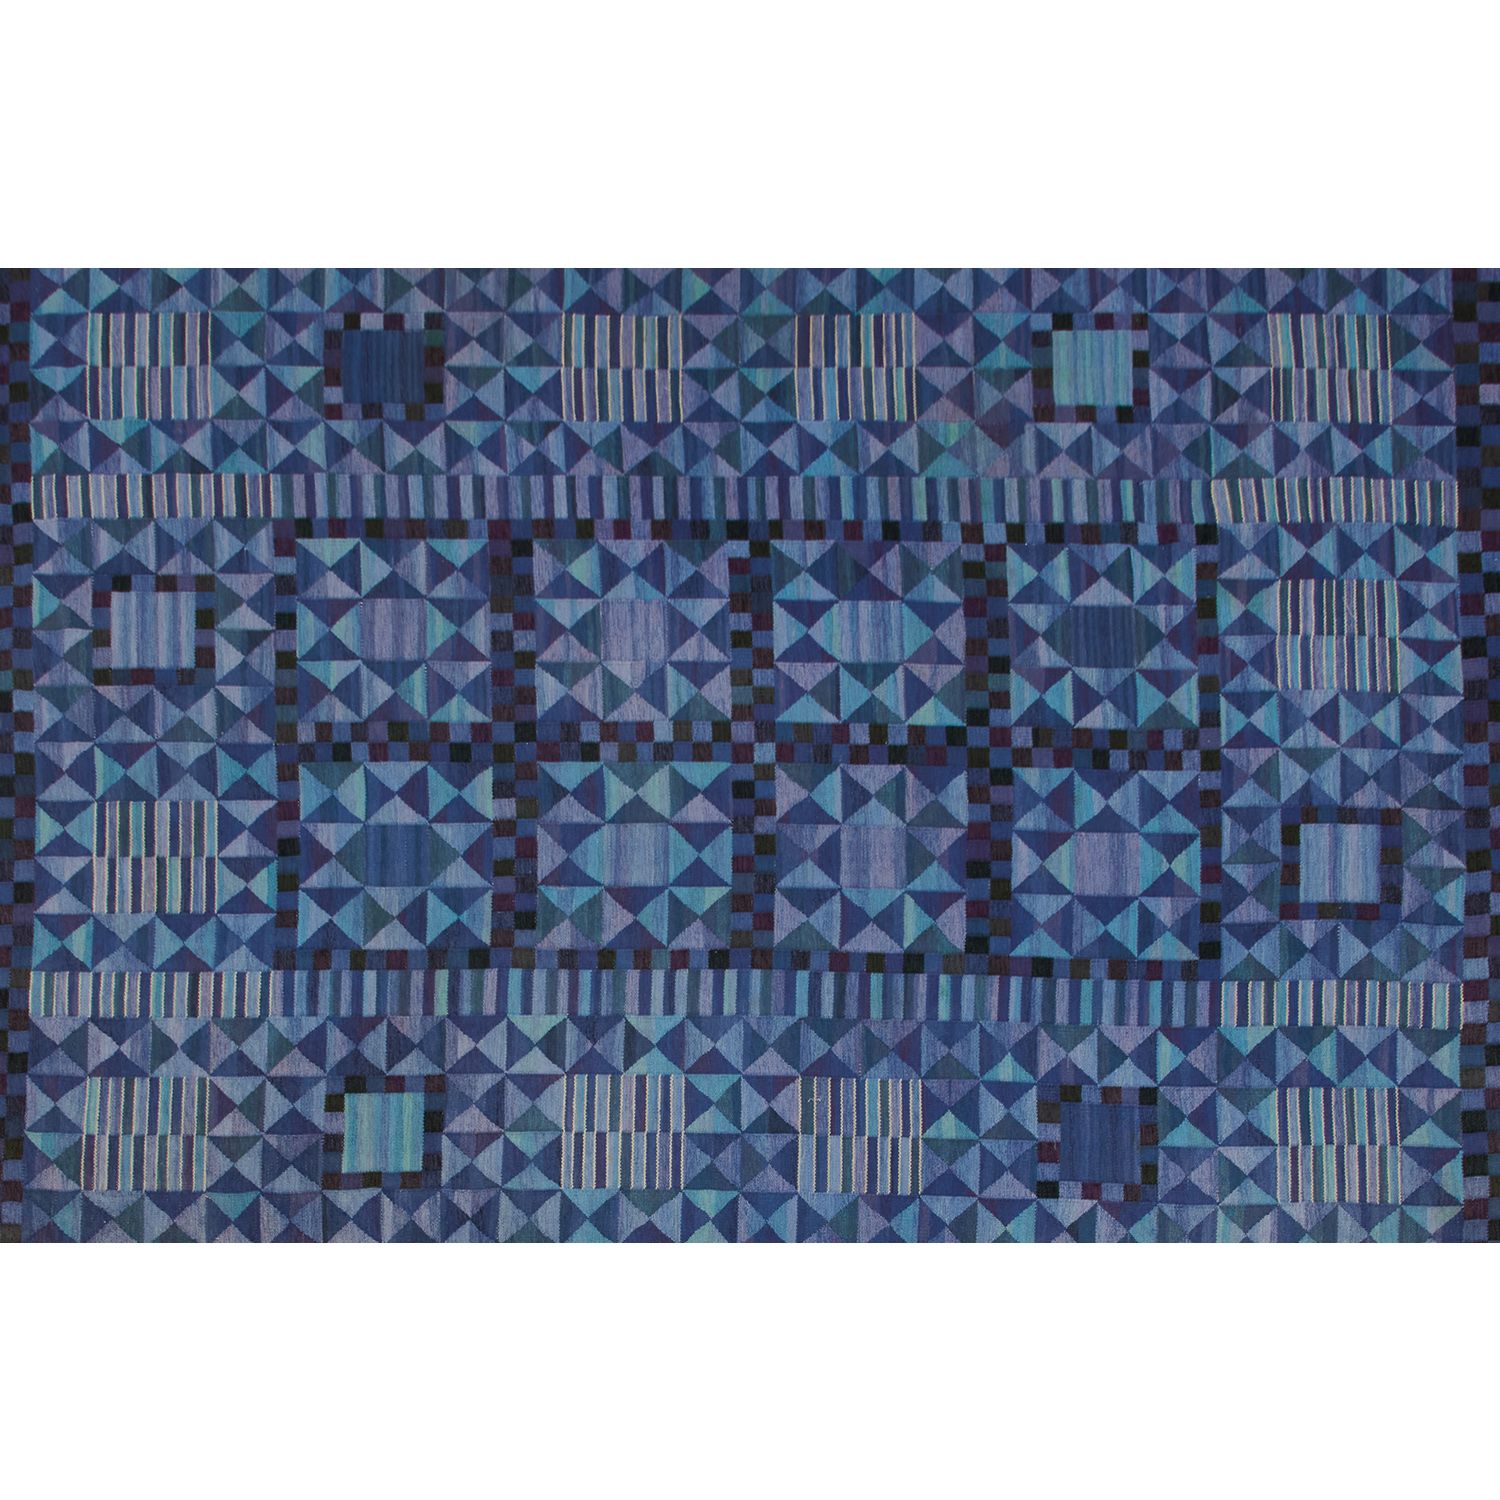 Null 玛丽安-里希特(1916-2010)

魯比羅薩(Rubirosa)

地毯

羊毛织品

版本Märta Mås-Fjetterström AB

&hellip;